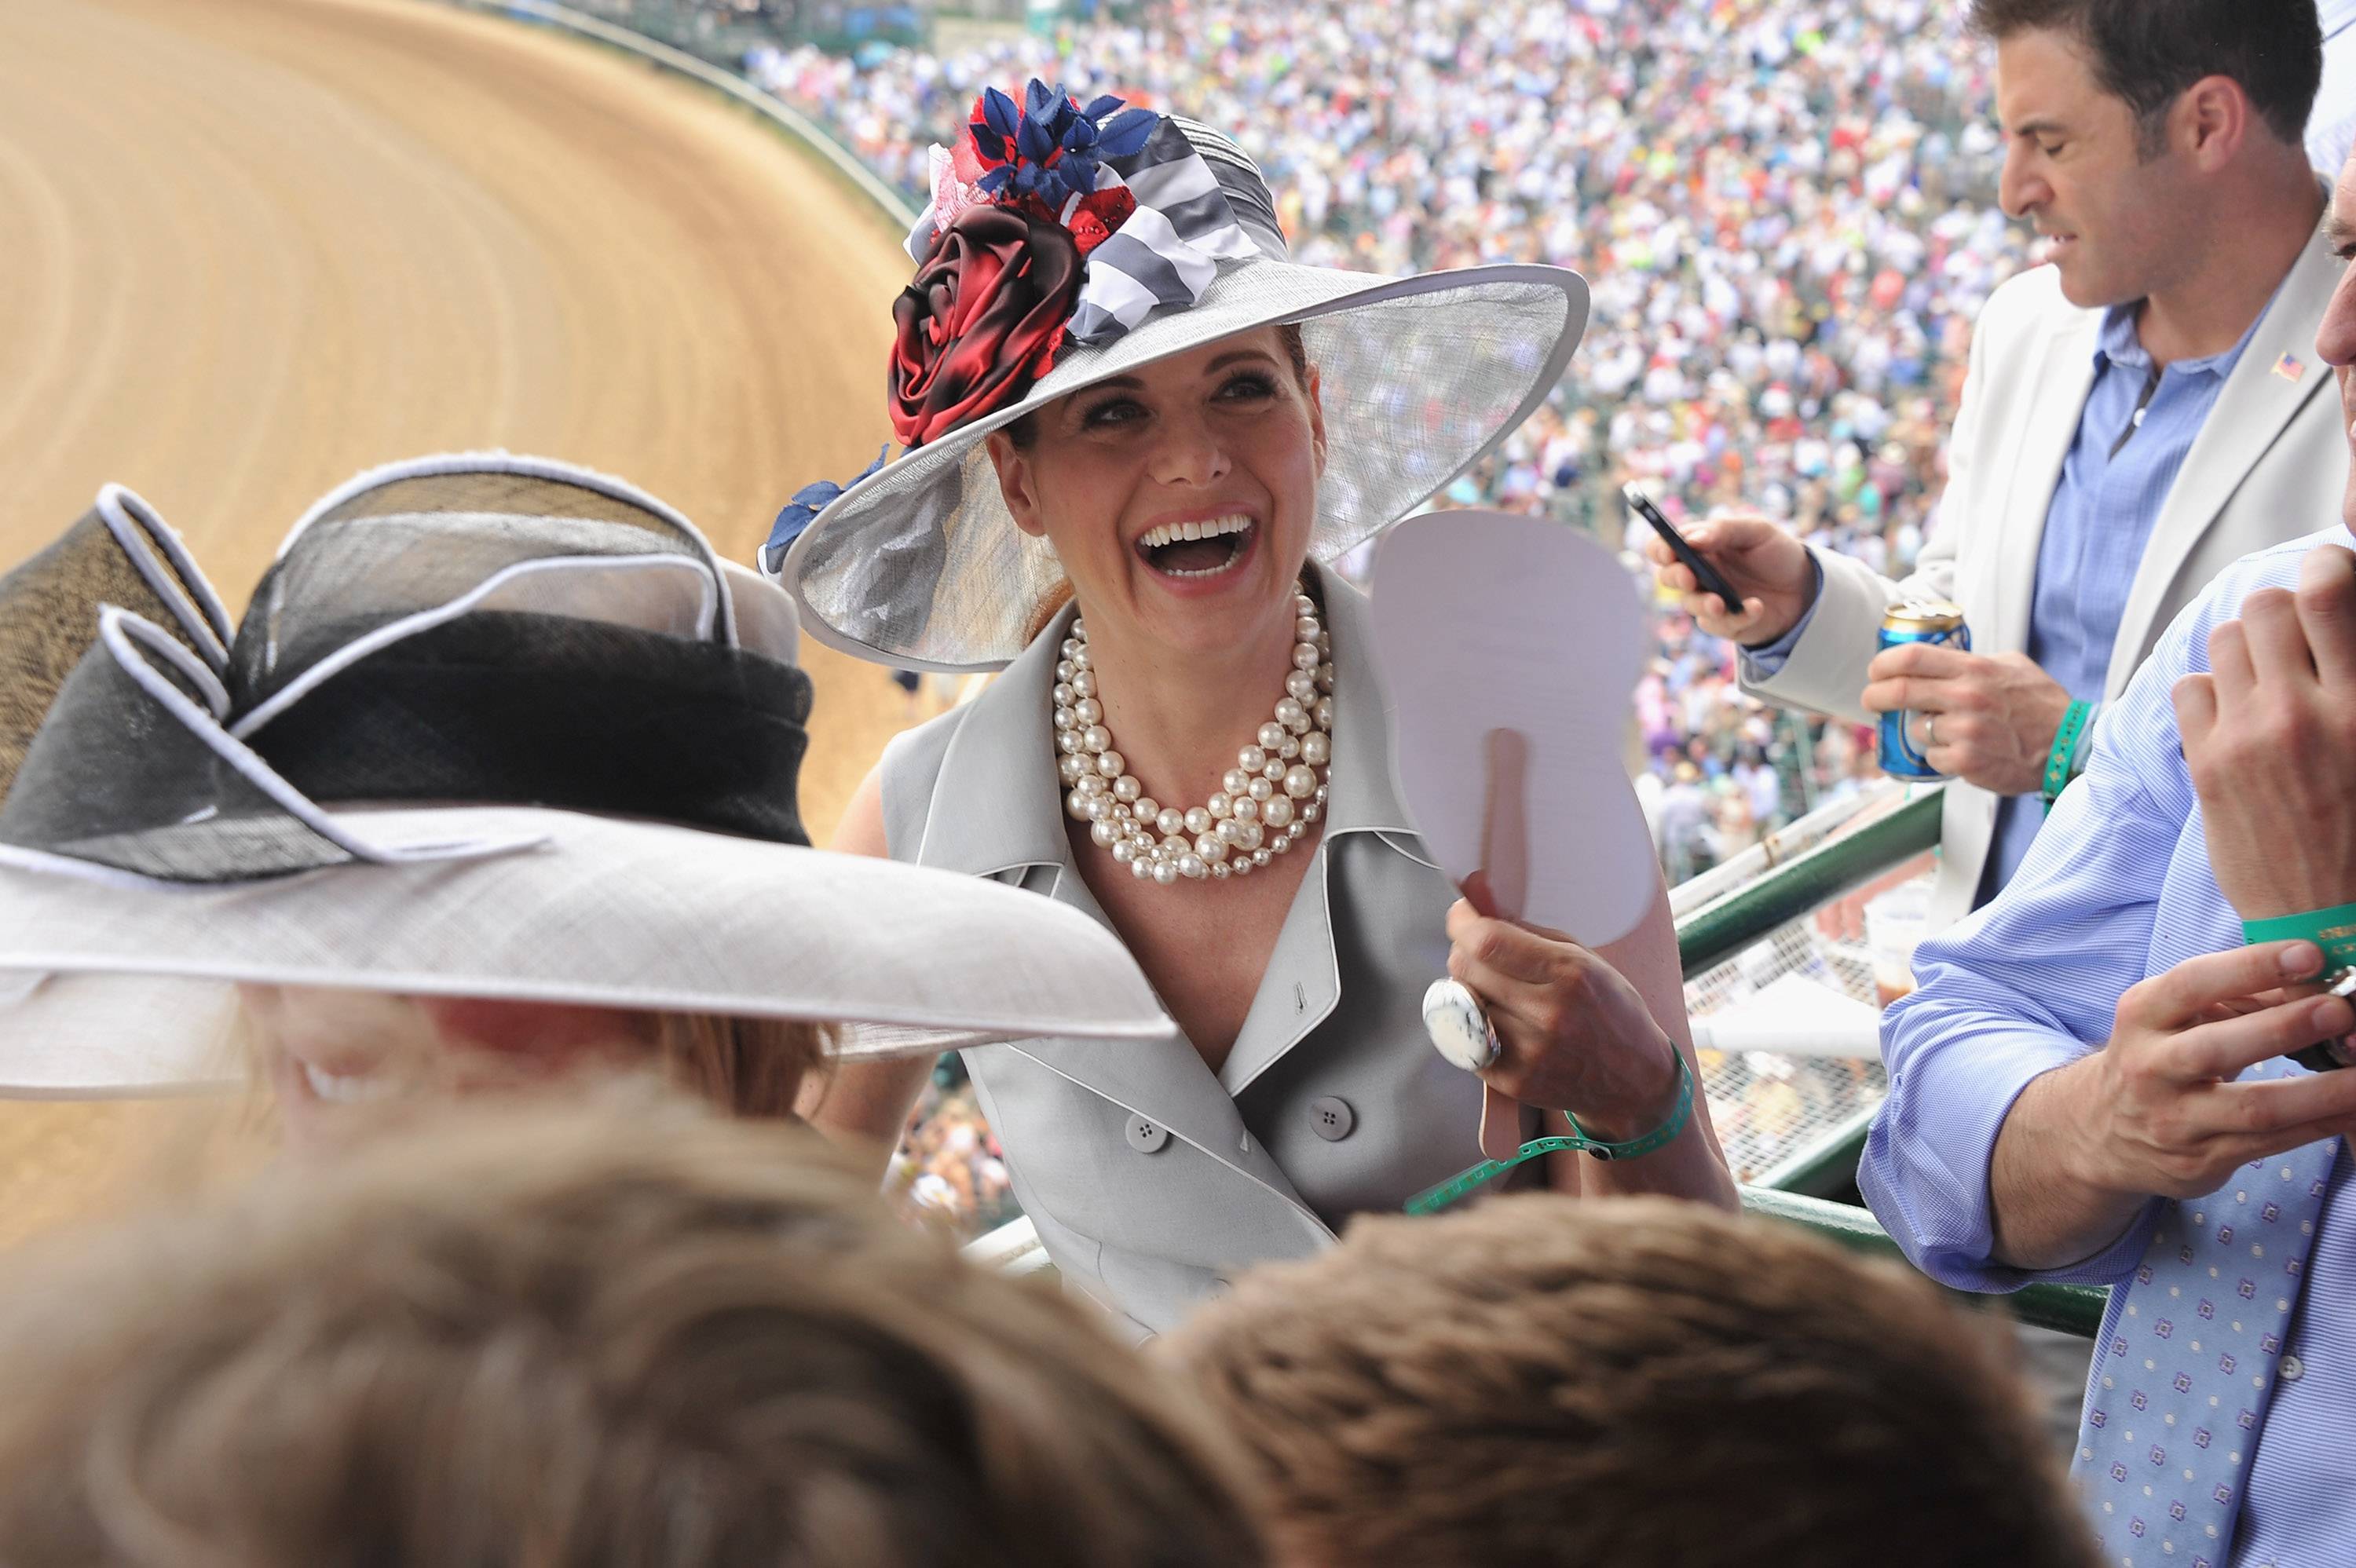 Debra Messing wears GREY GOOSE Cherry Noir Vodka Inspired Hat at the 2012 Kentucky Derby3